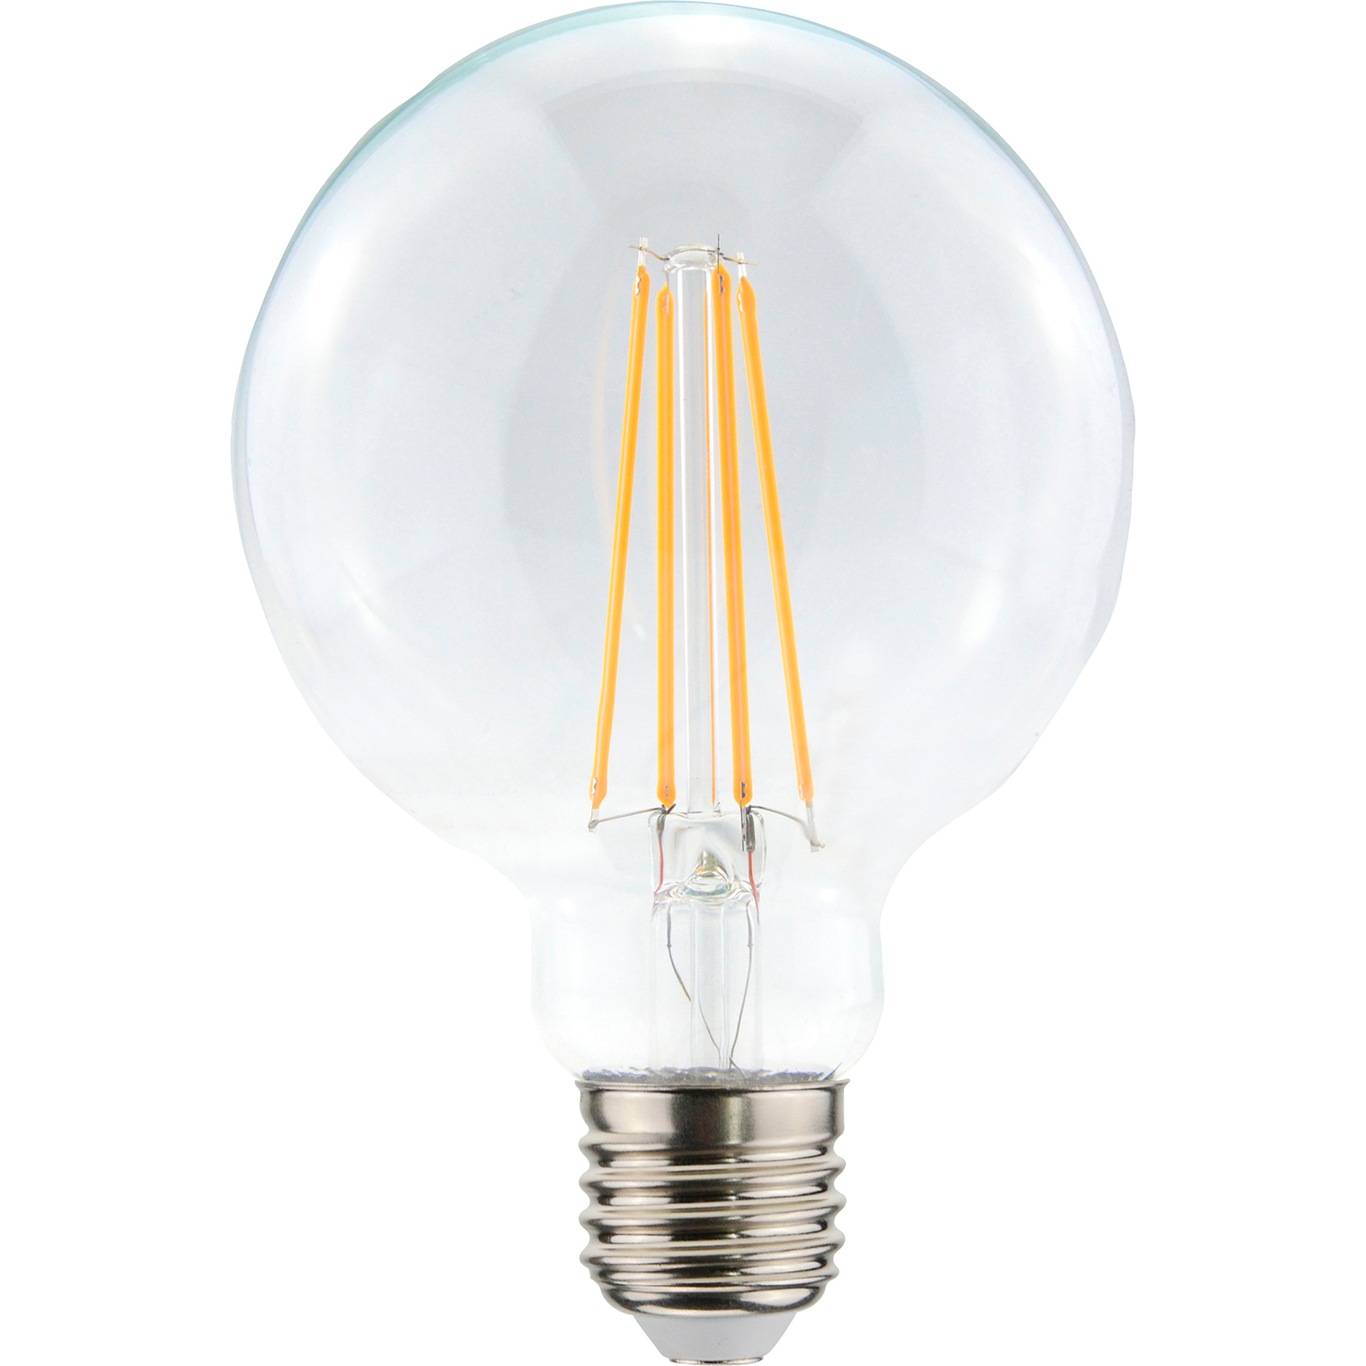 LED Decor Filament Glob 95mm 2200K 3,5W E27 300lm Dimbar Klar